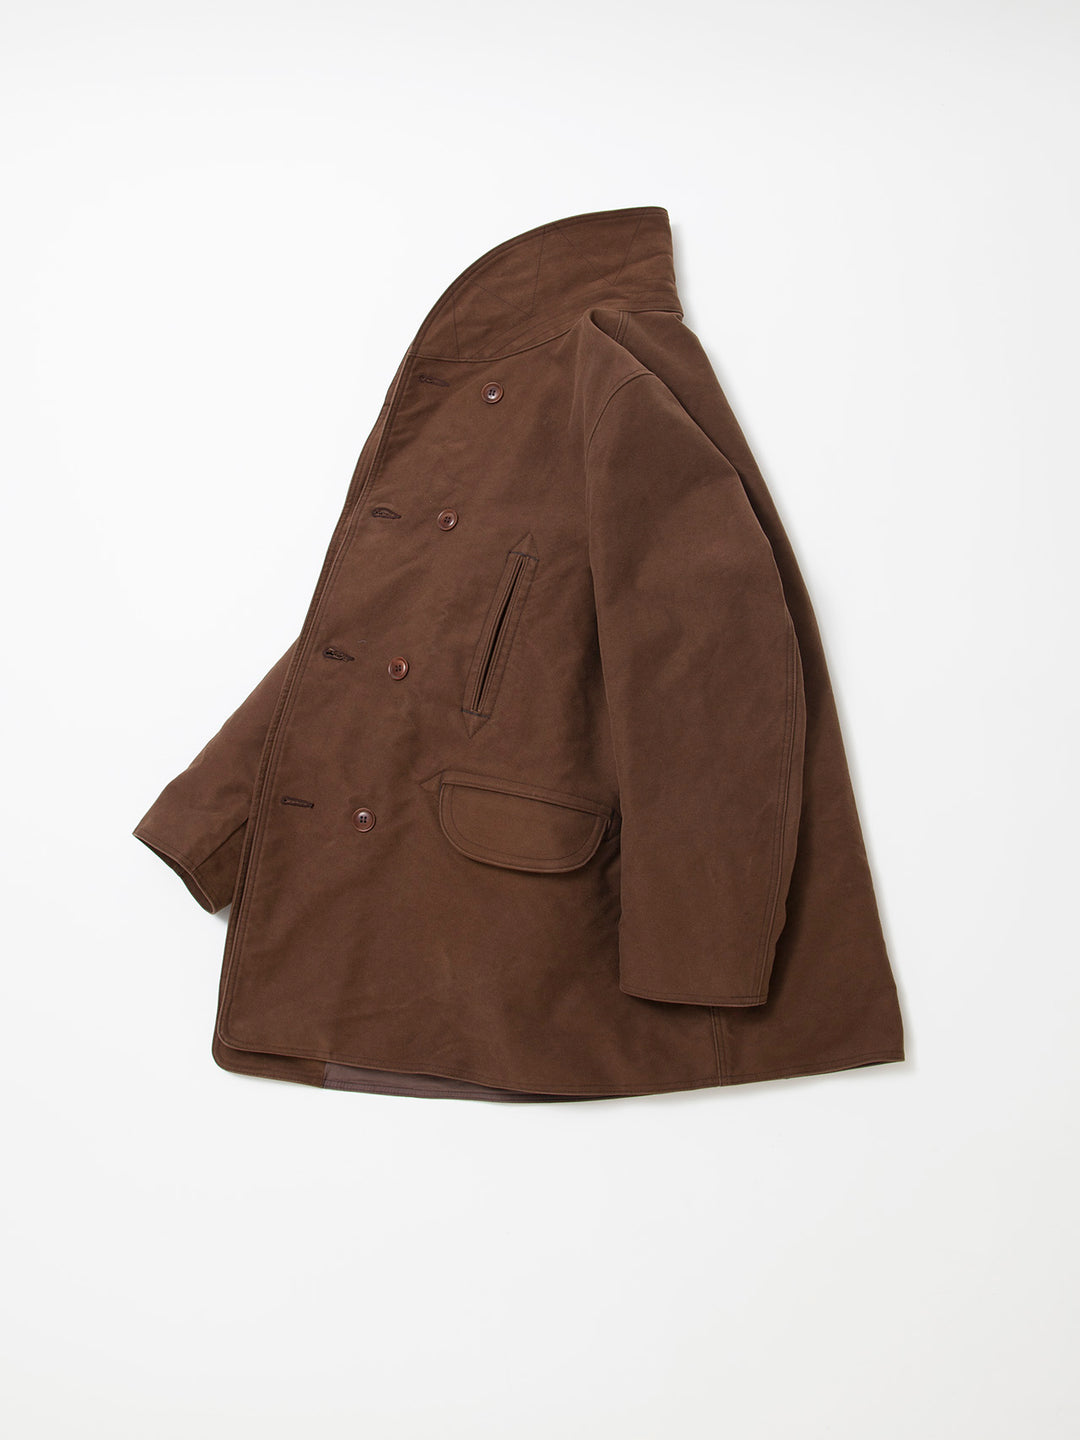 THE CORONA UTILITY - CJ009・Utility Mackinaw Coat / Cotton Moleskin - Brown